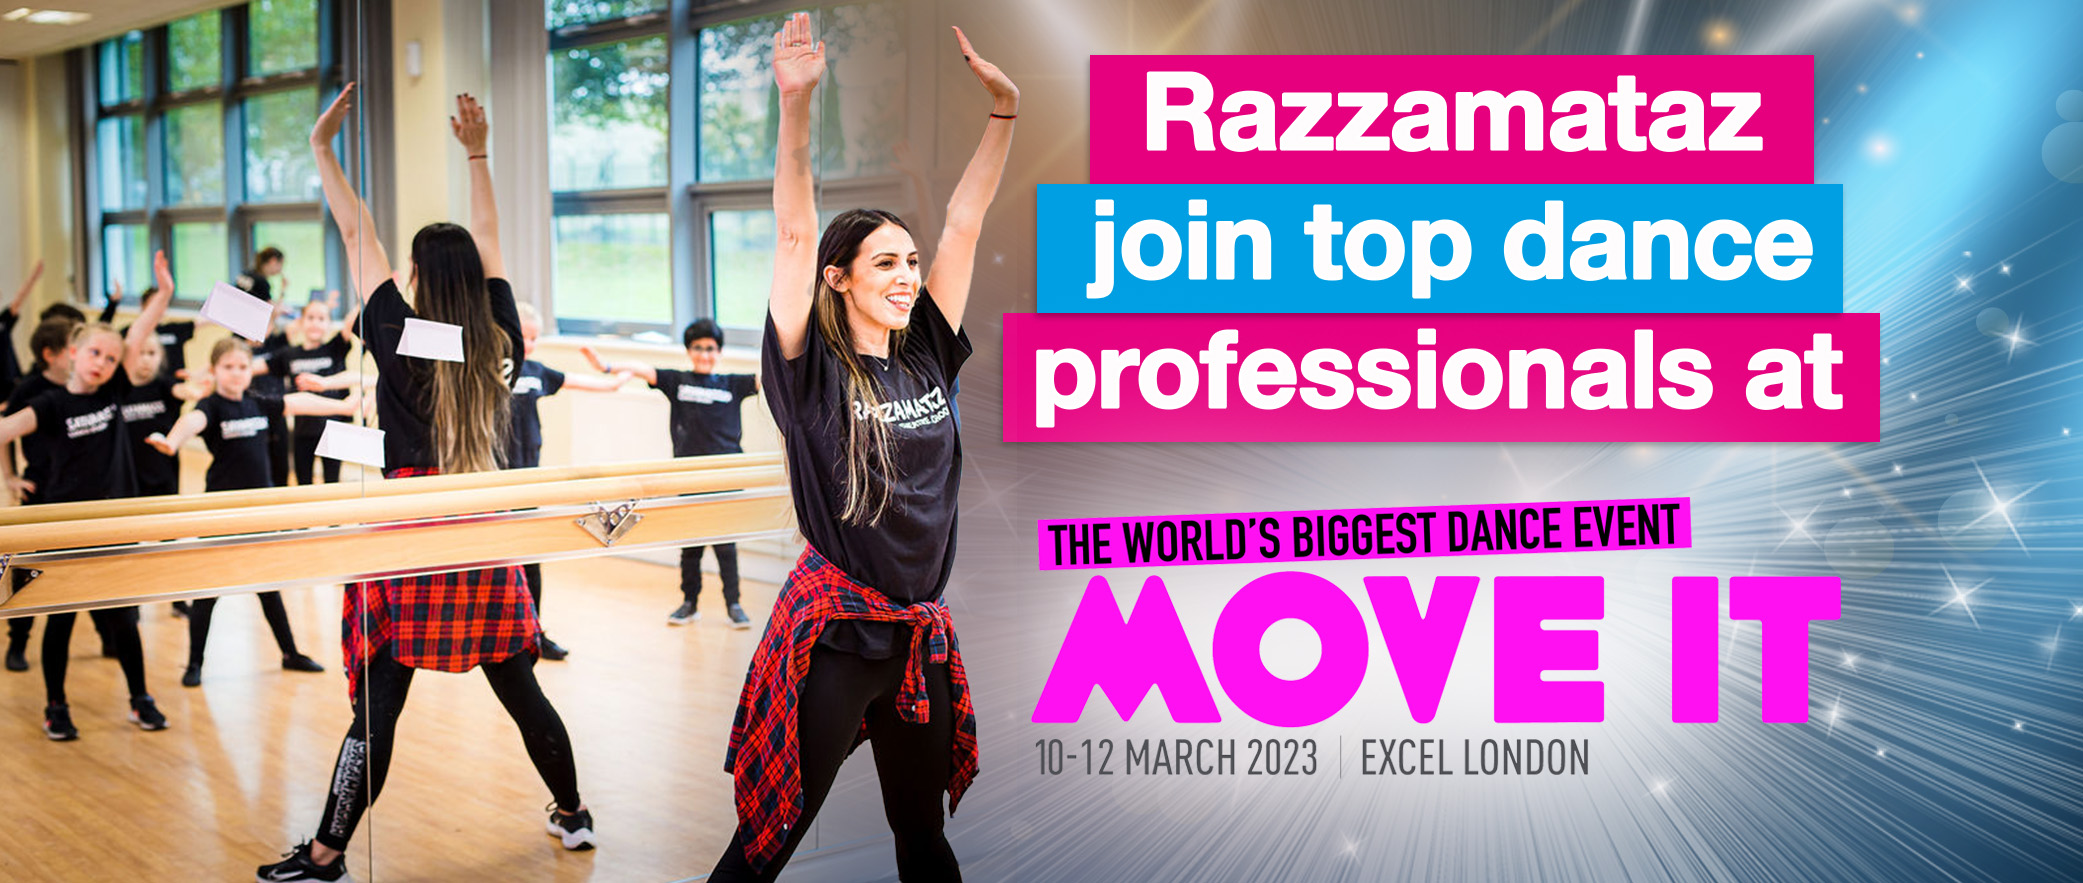 Razzamataz joins top dance professionals at Move It